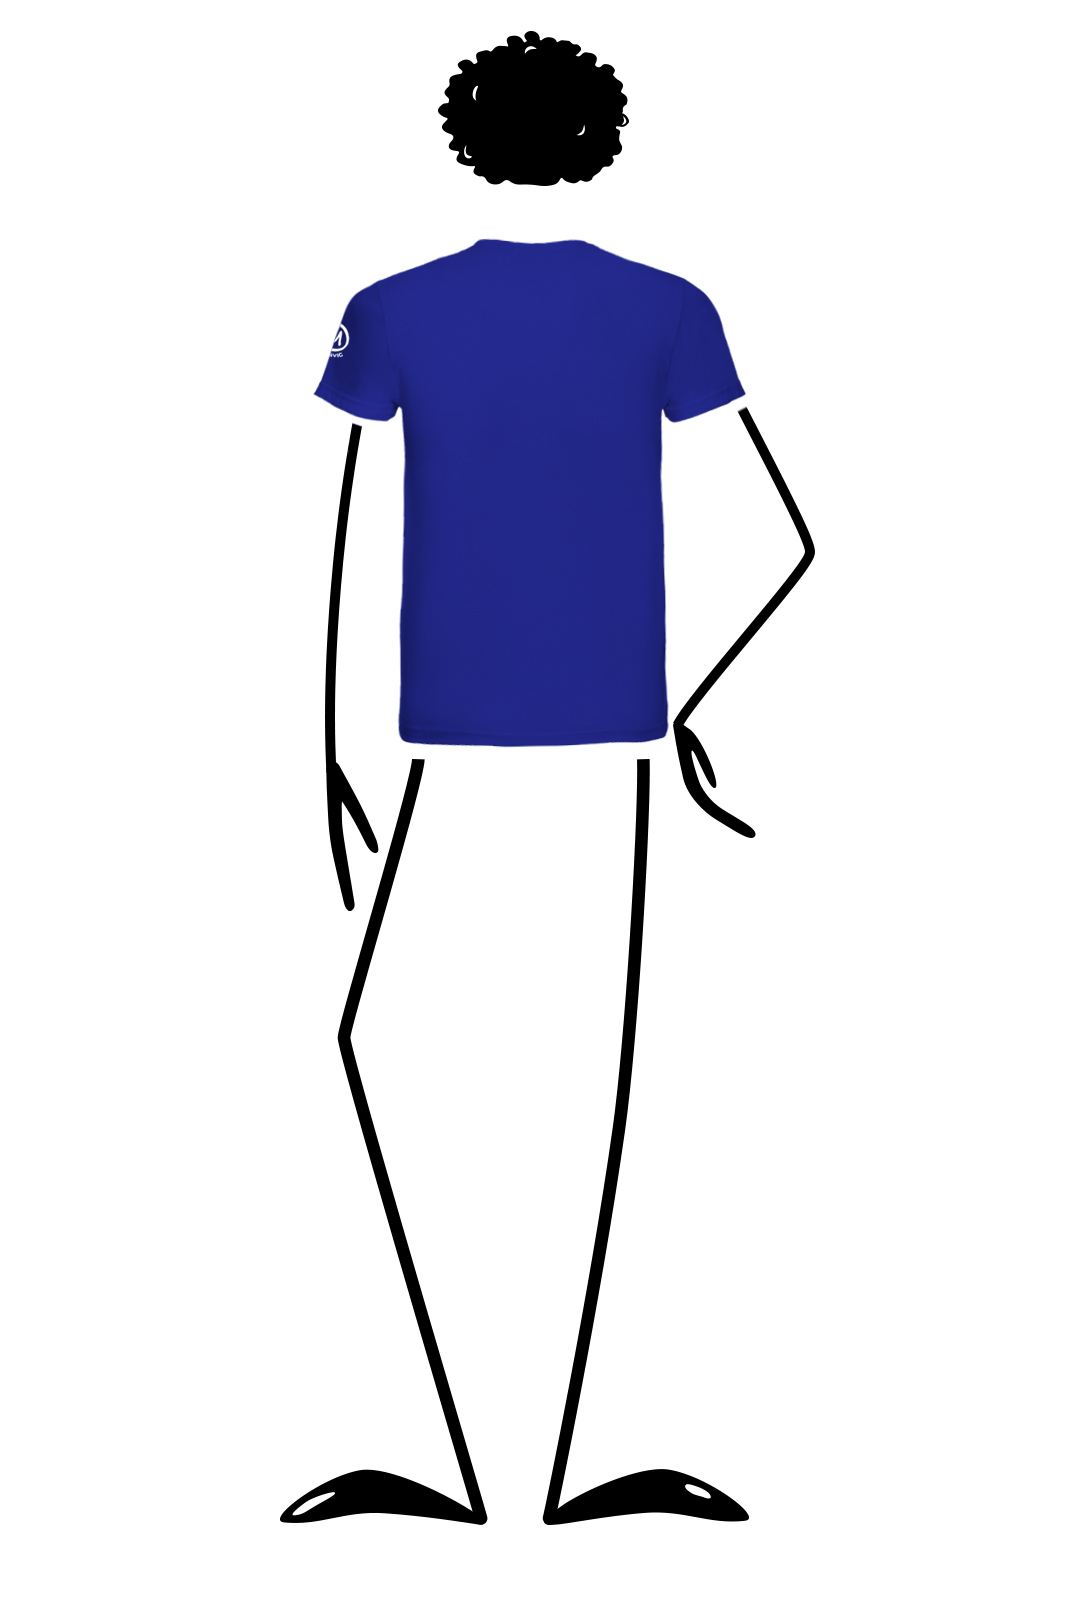 t-shirt arrampicata uomo HASH Monvic blue-royal Glide